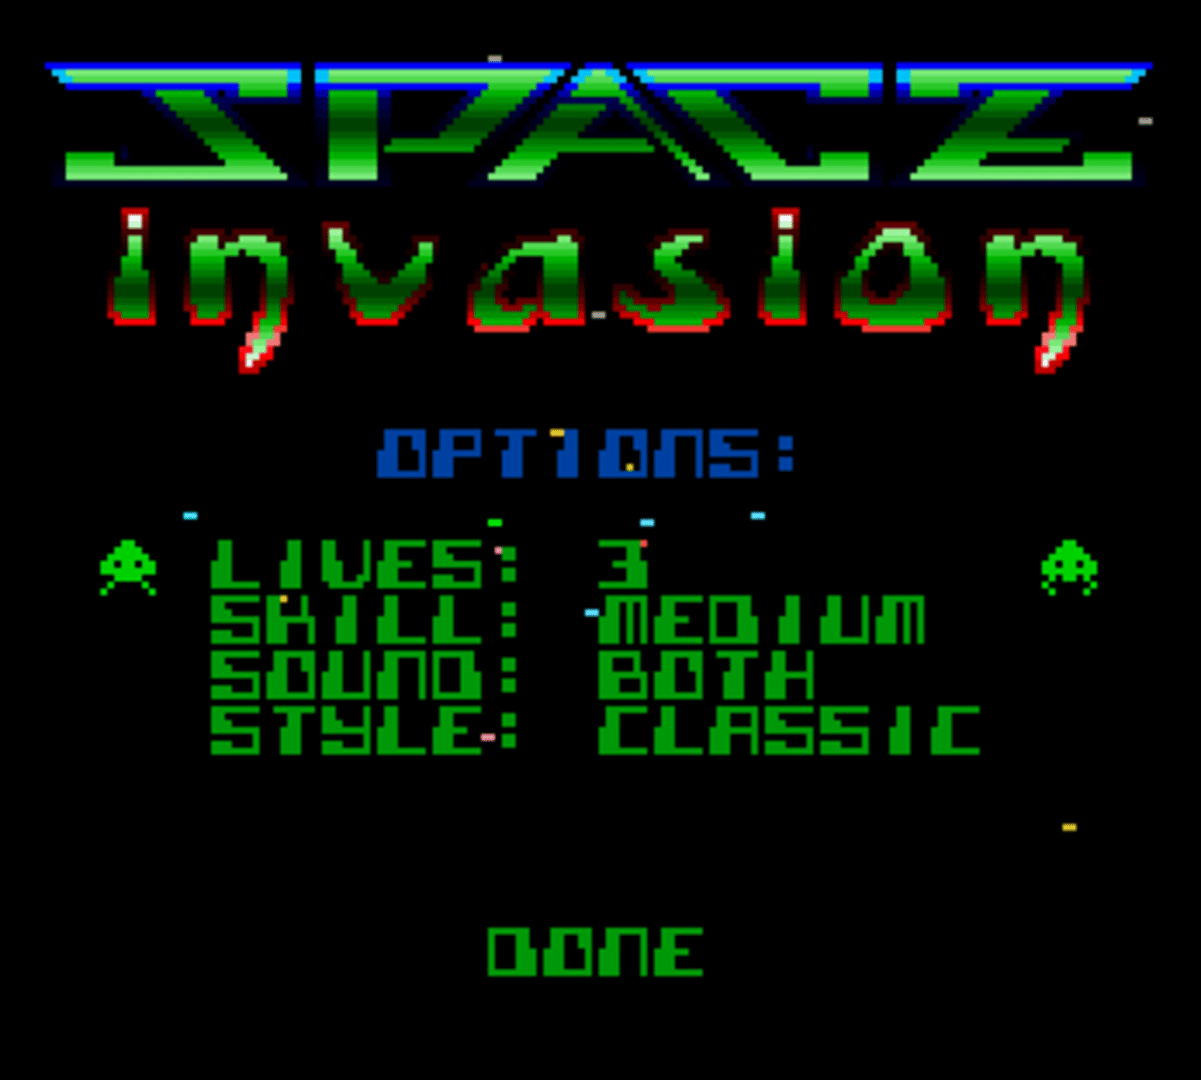 Space Invasion screenshot